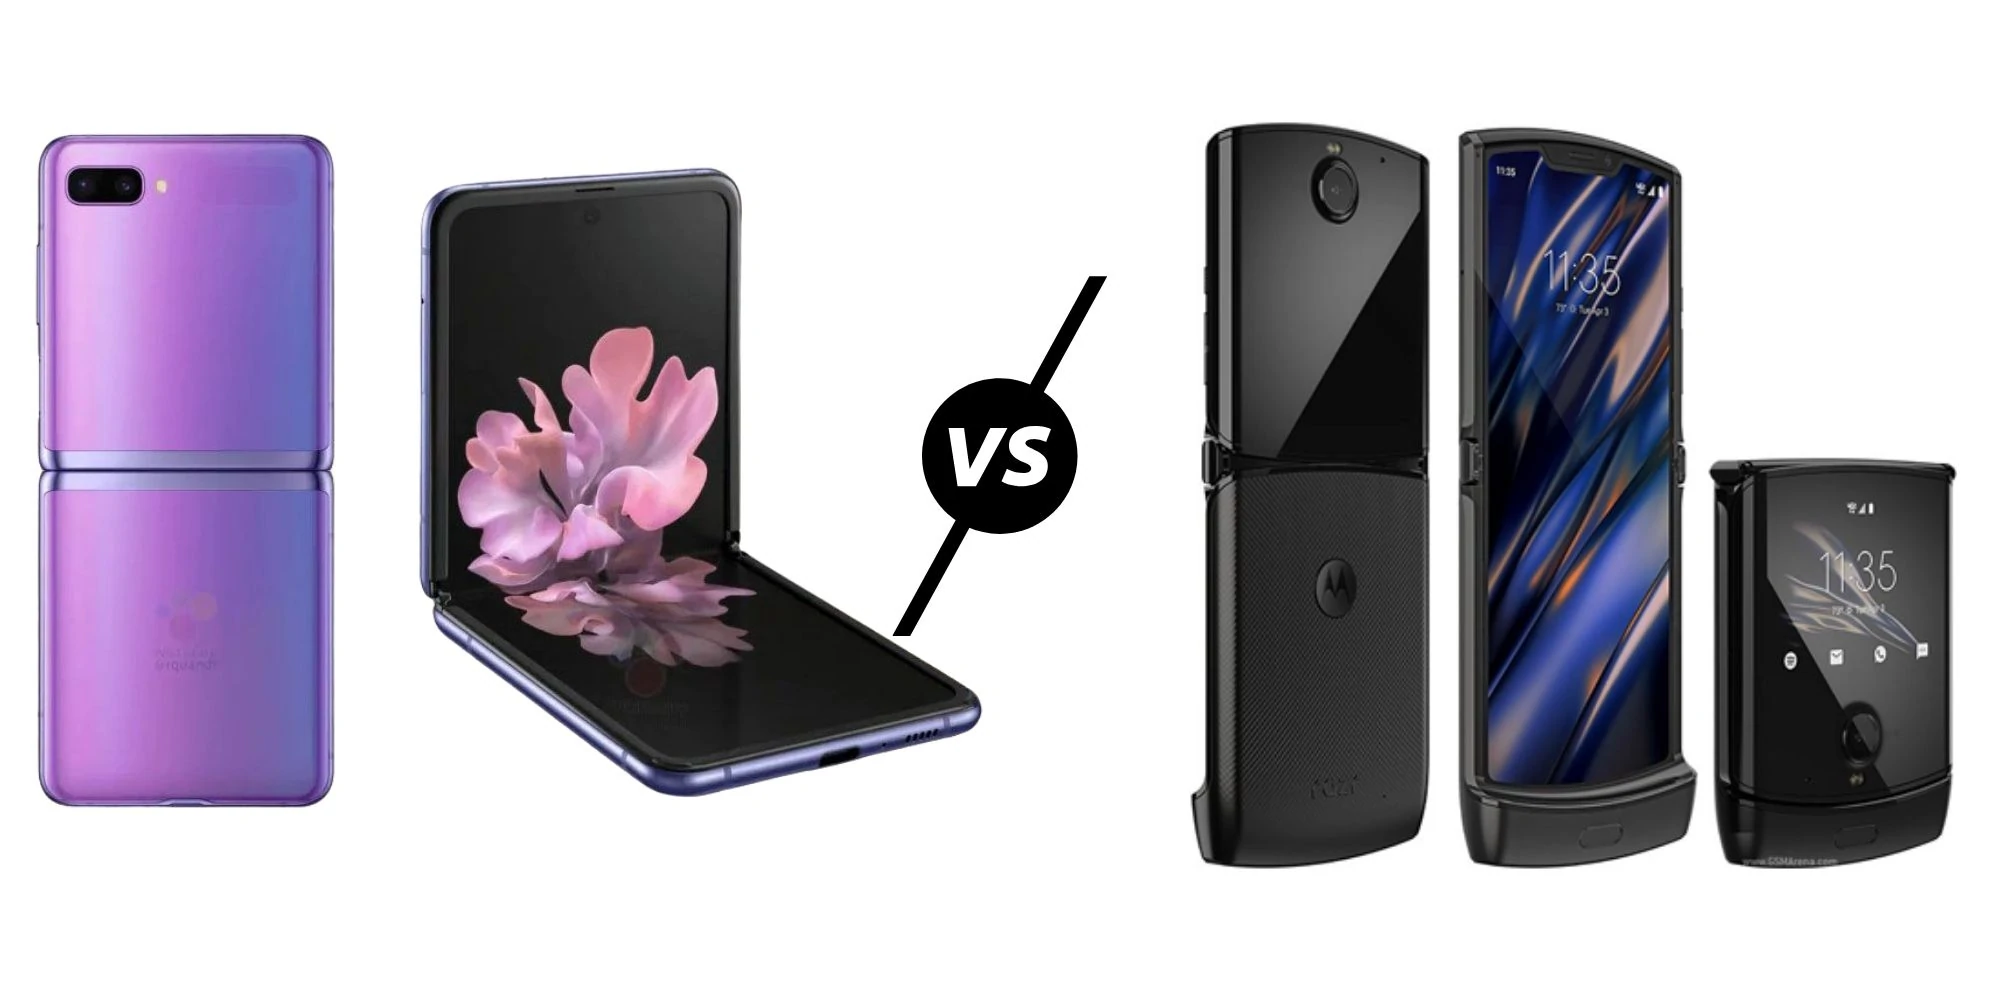 Samsung Galaxy Z Flip vs Motorola Razr 2020 Flip Phones Compared – Who does it best?